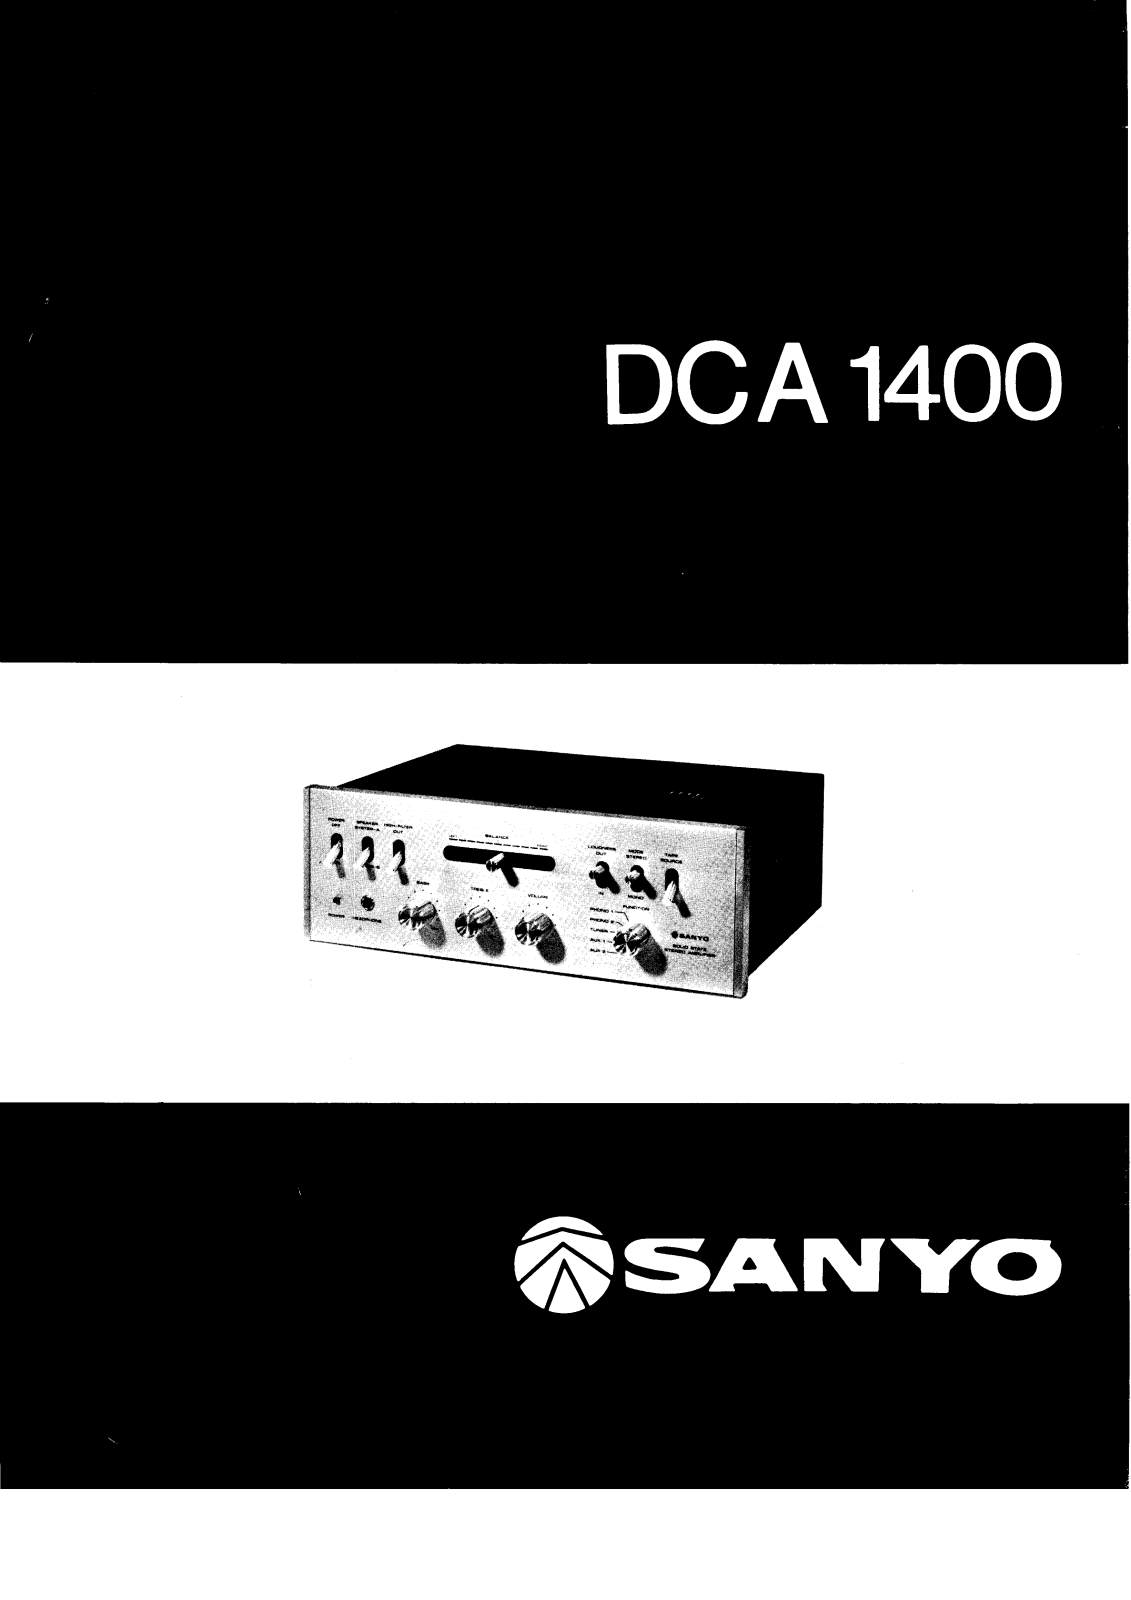 Sanyo DCA 1400 Instruction Manual